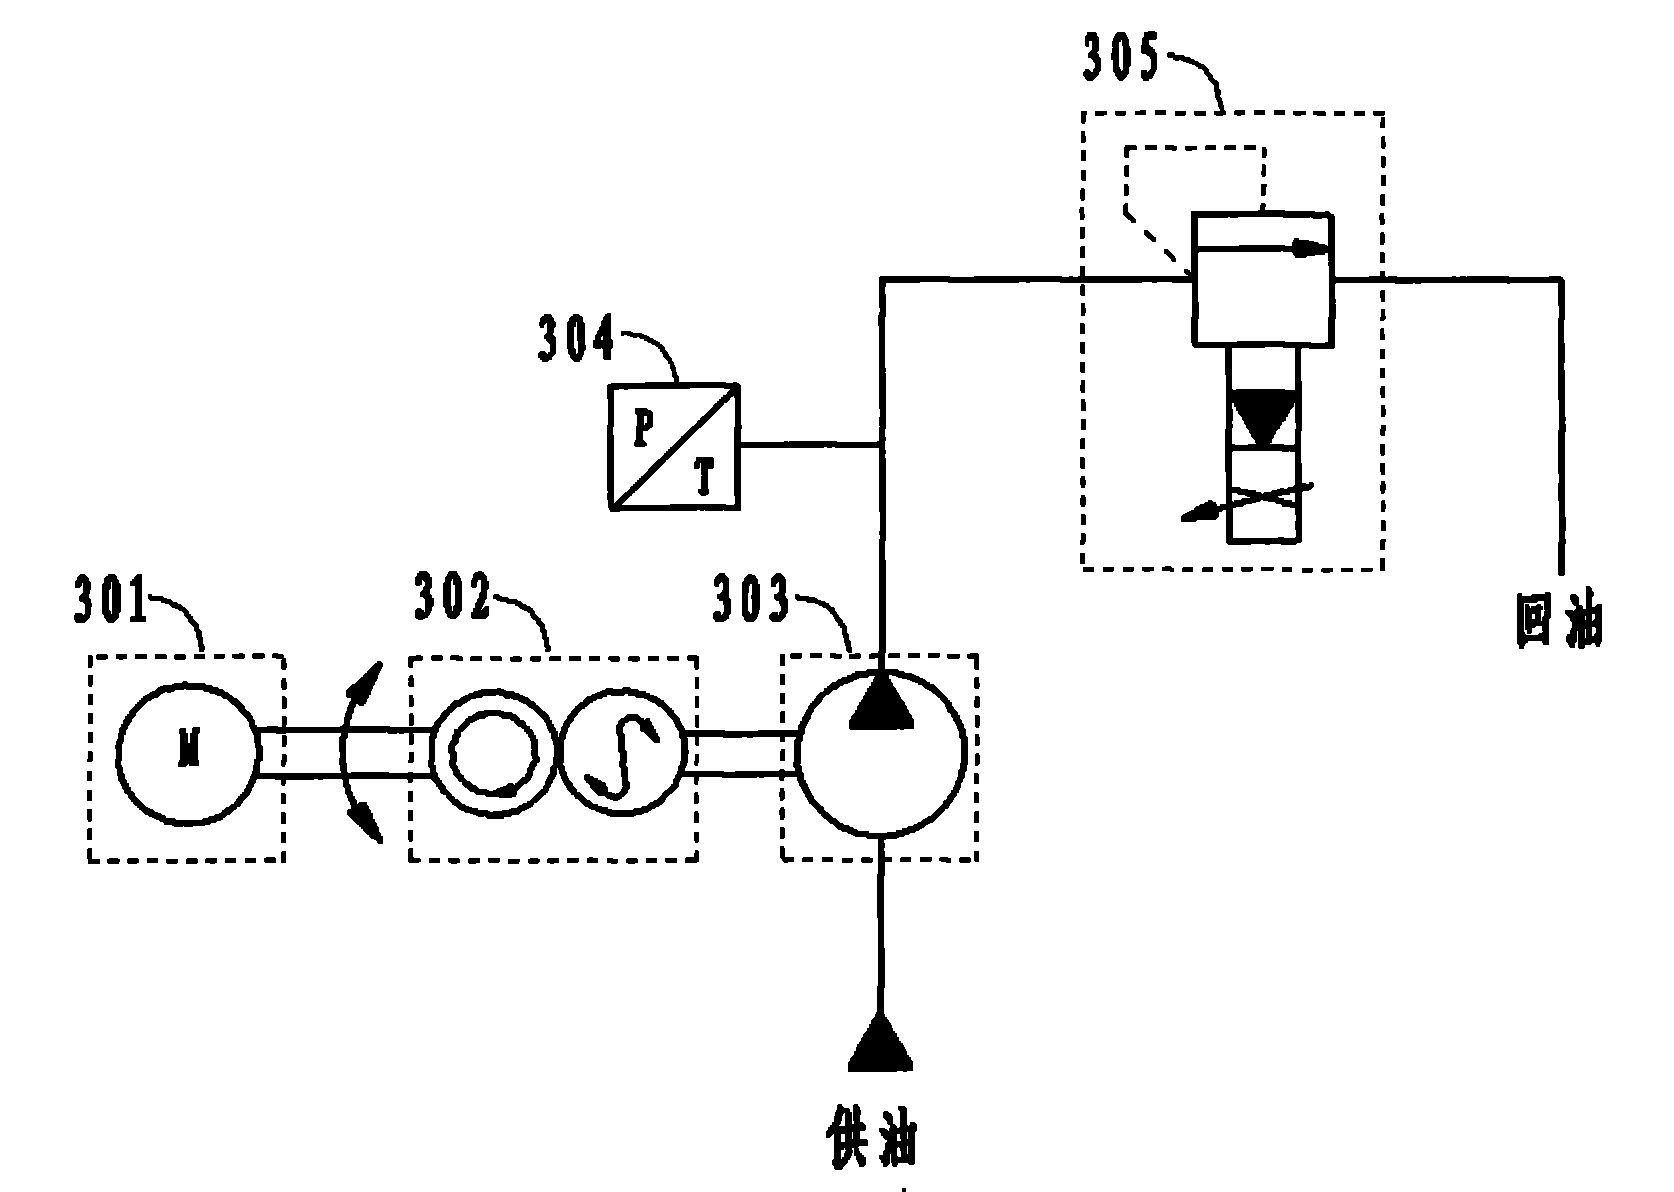 Model-based method for loading electro-hydraulic proportional valve